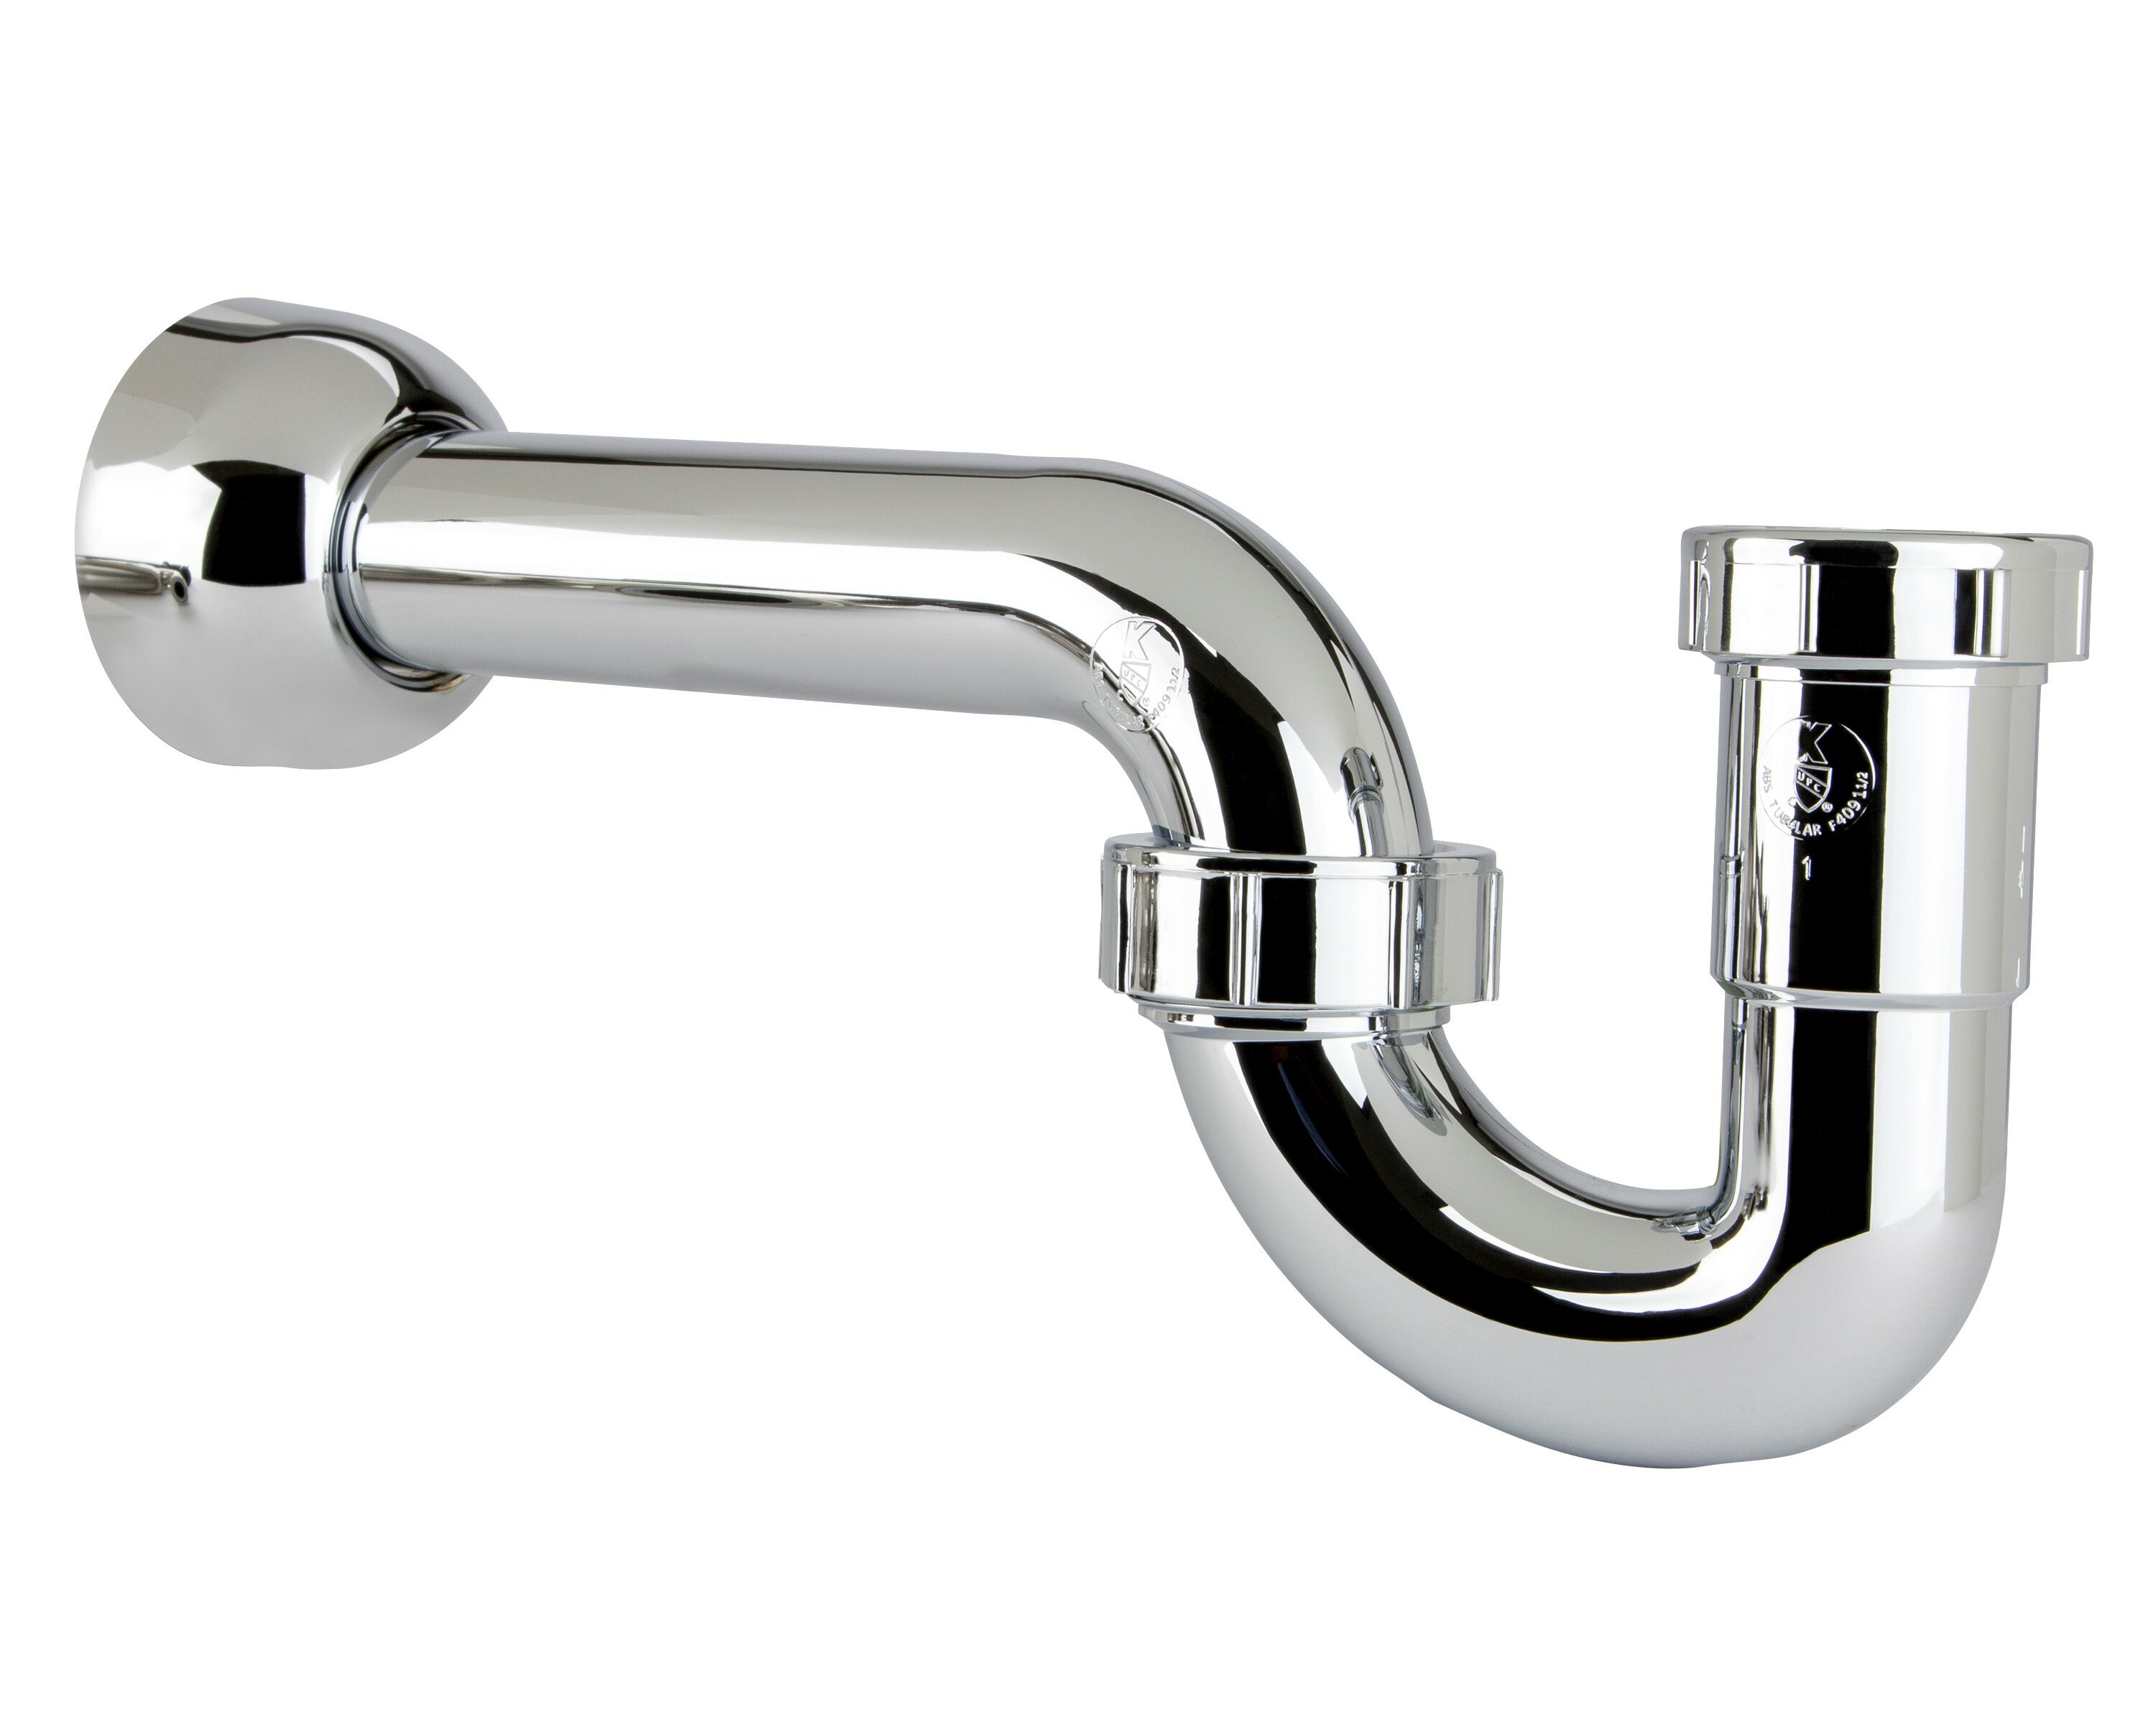 028.Universal Flex Connector P-trap plastic, brass drain